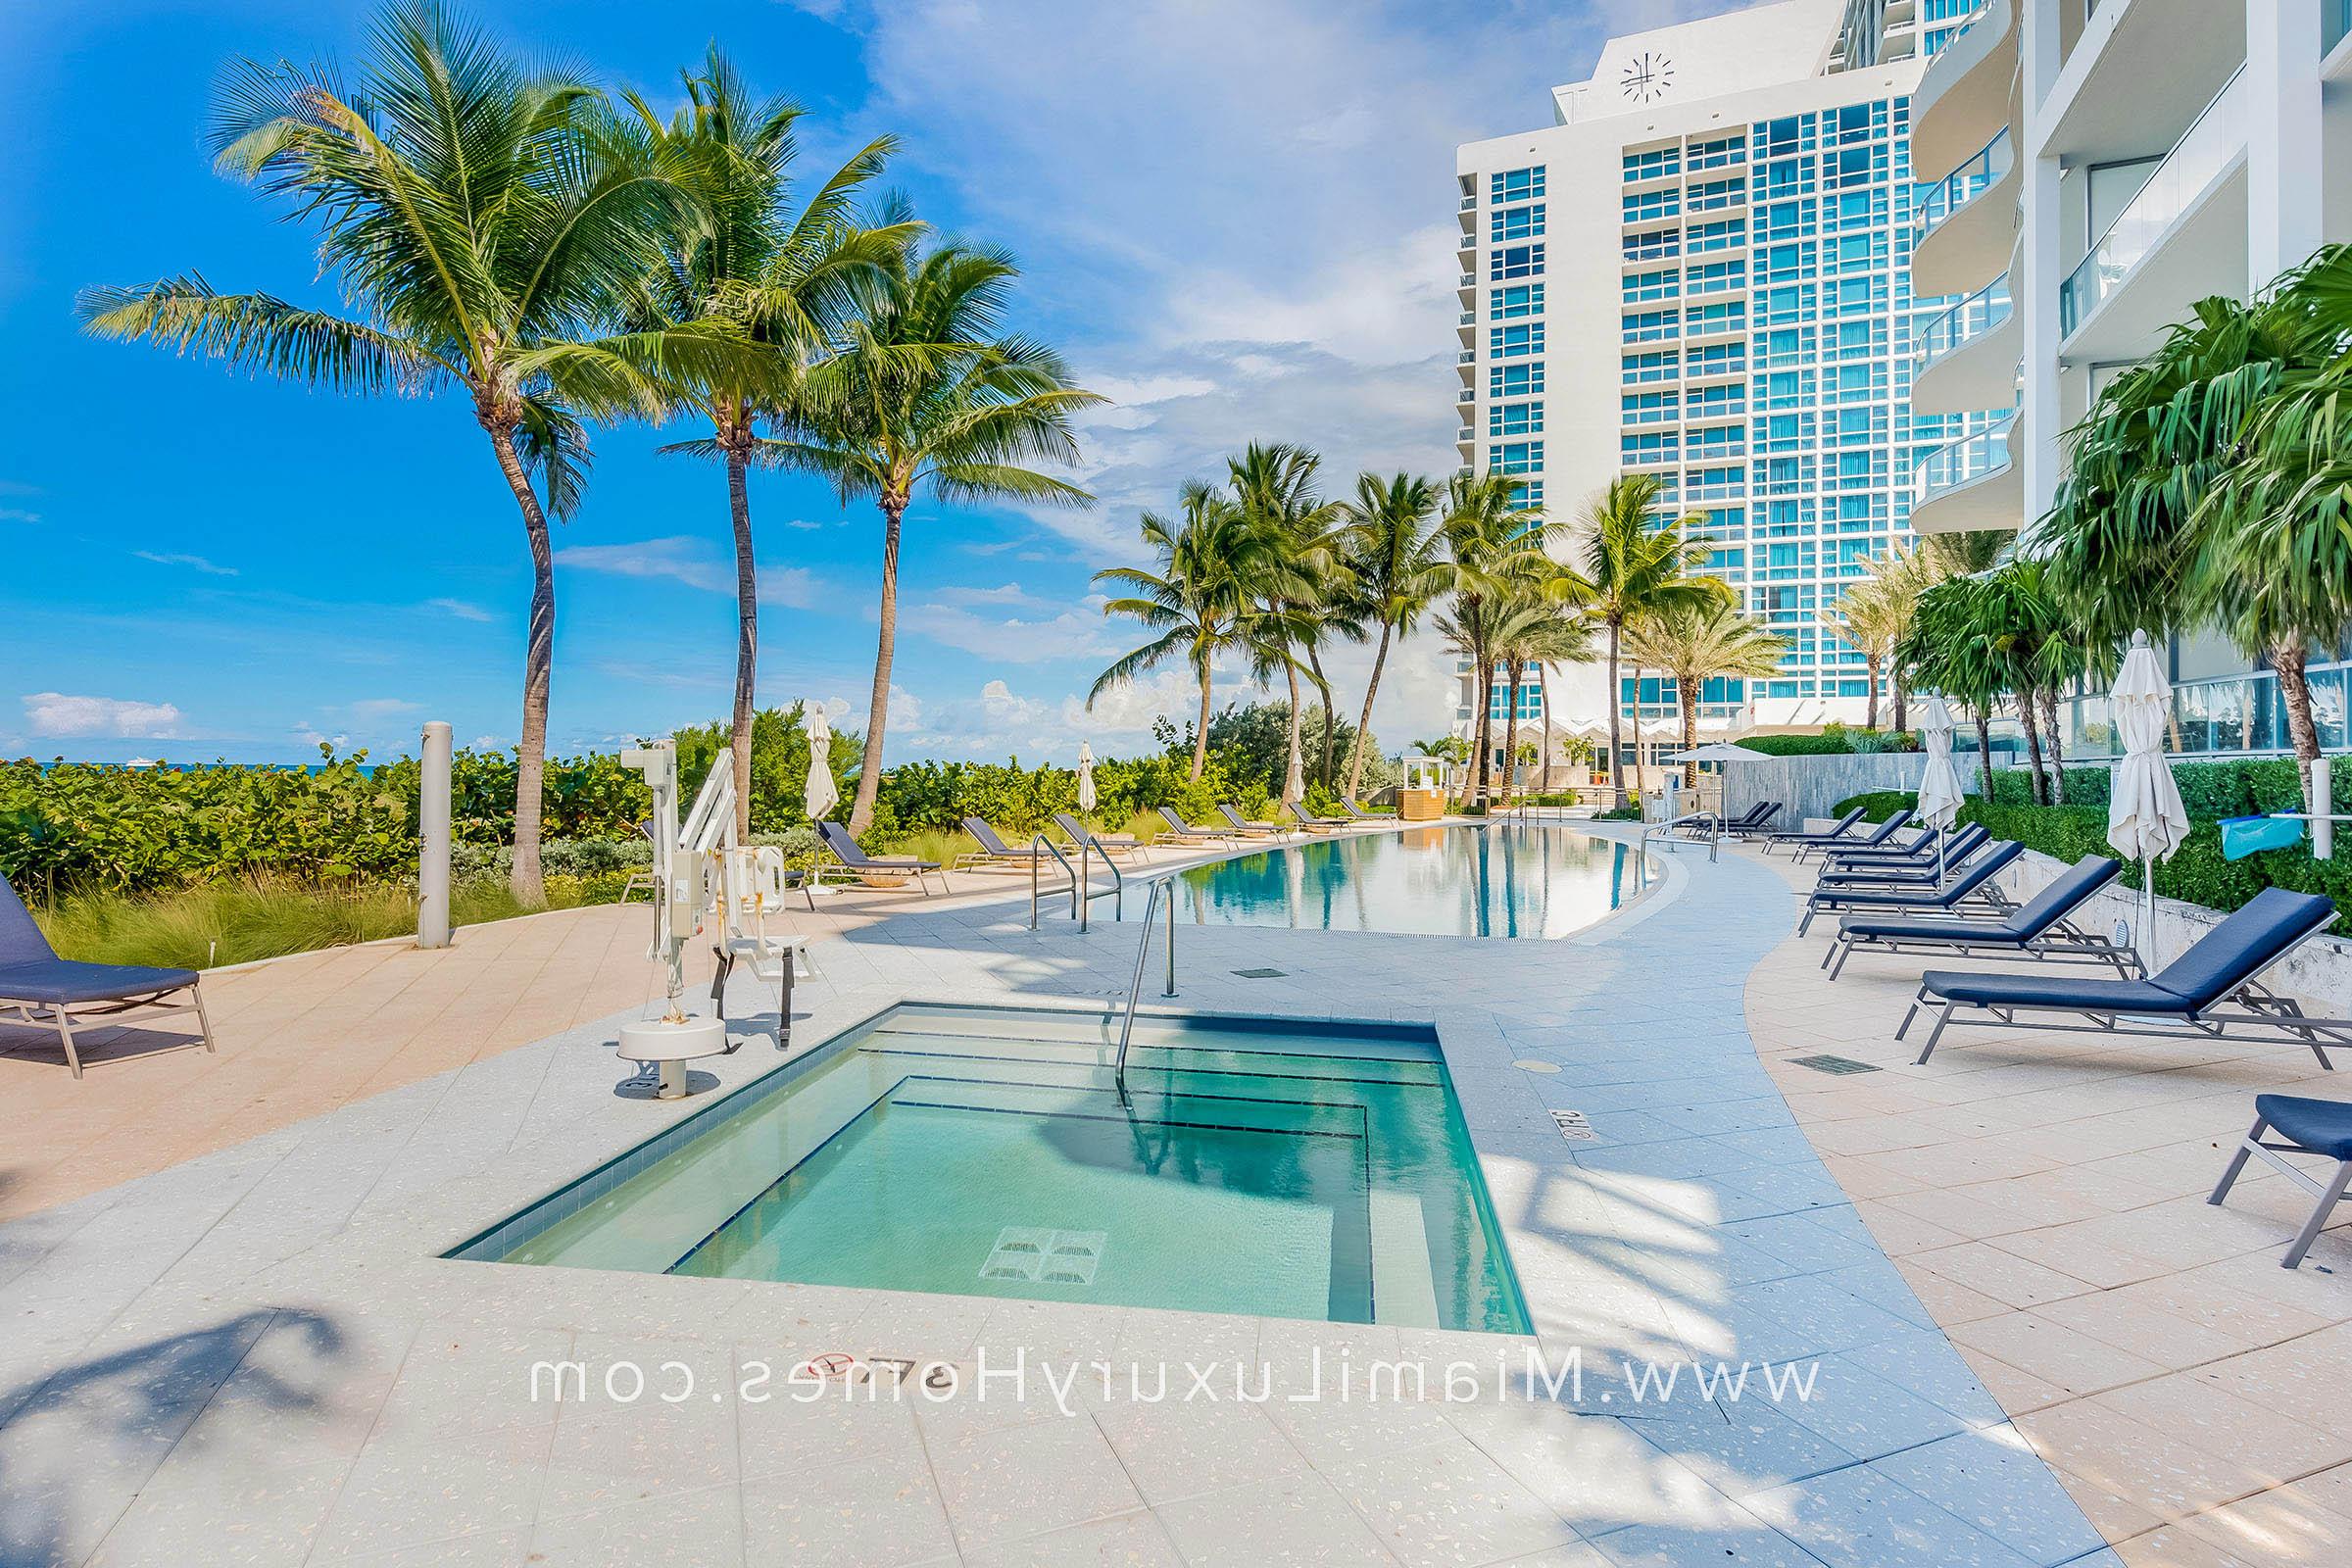 迈阿密海滩Carillon酒店 Pool Deck